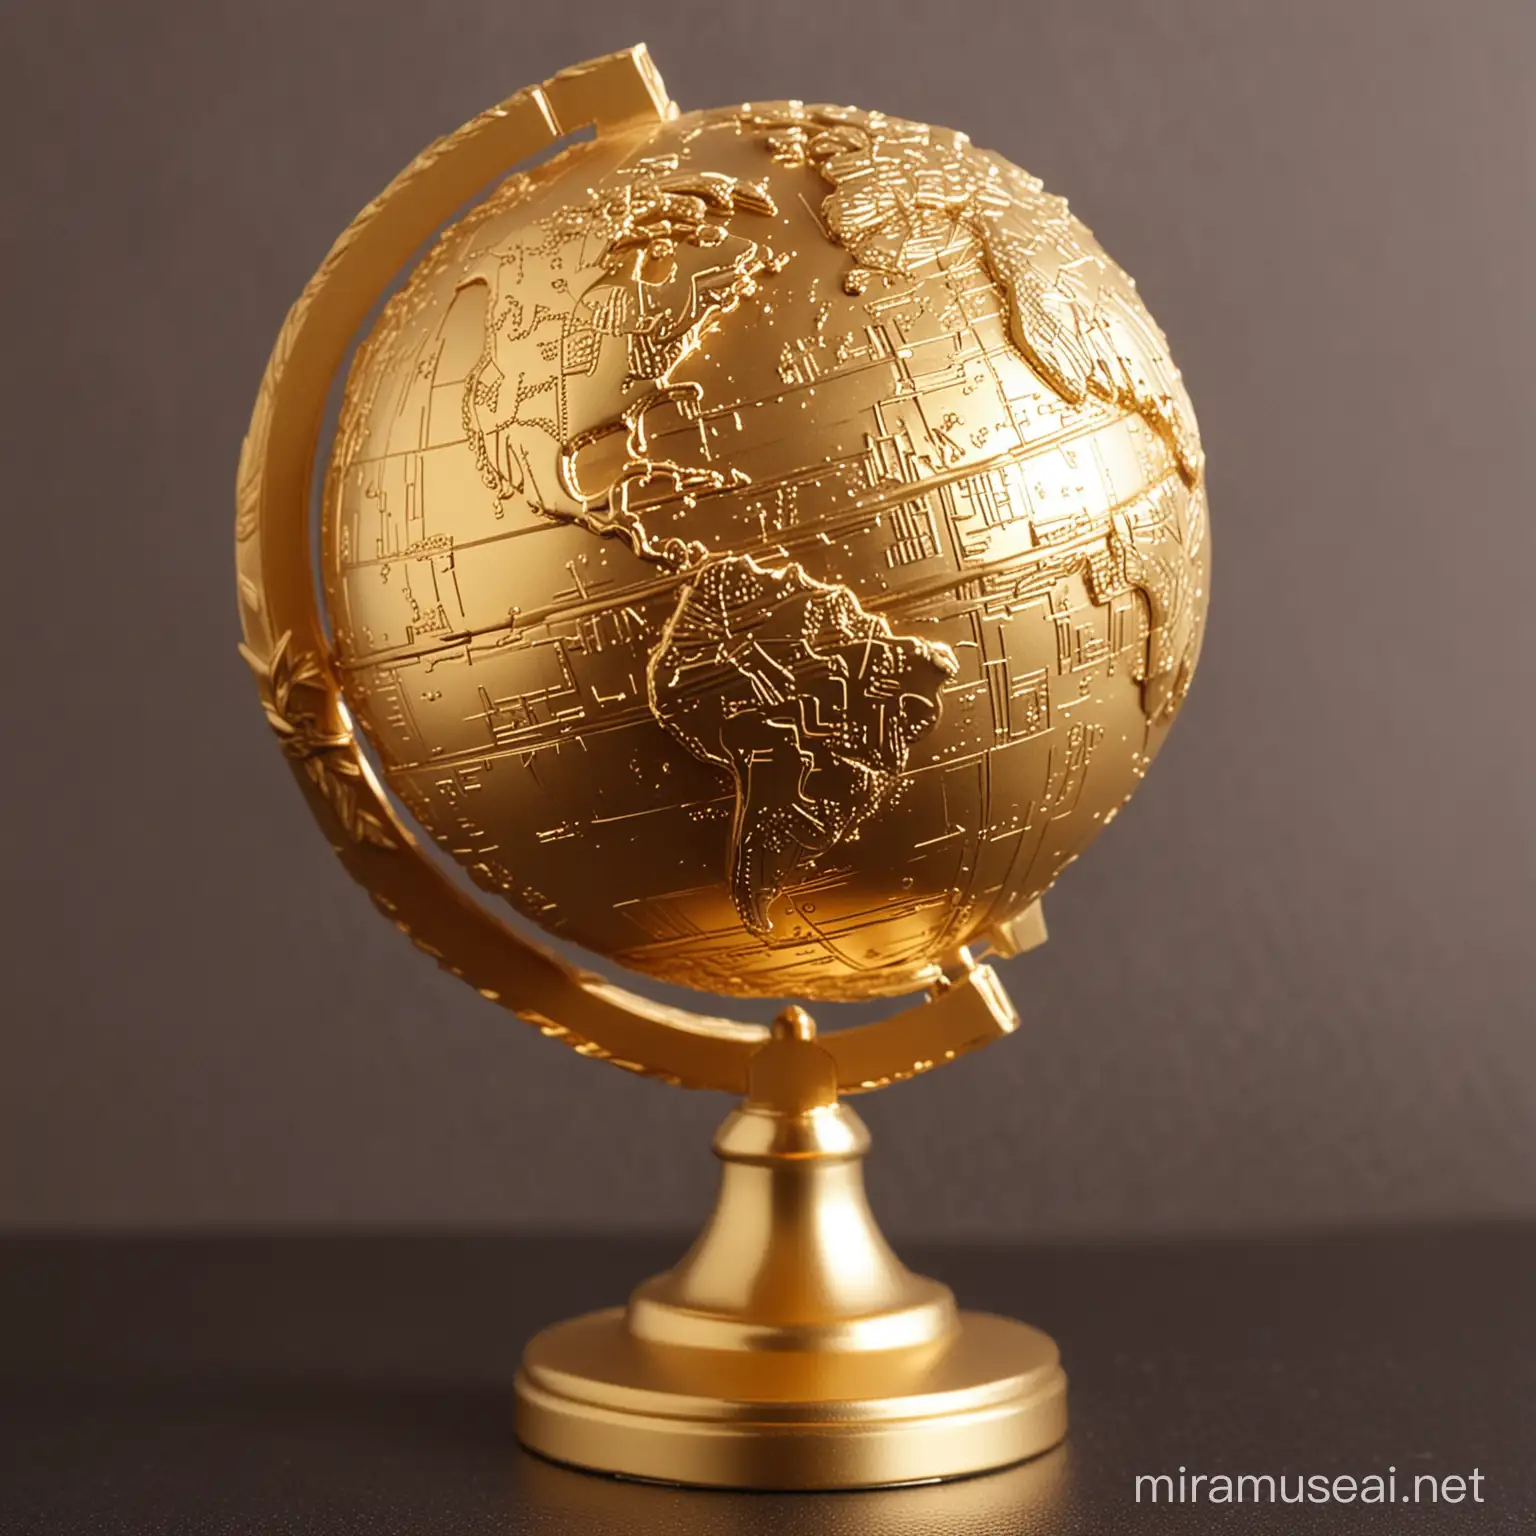 Crafting a Glowing Golden Globe Sculpture